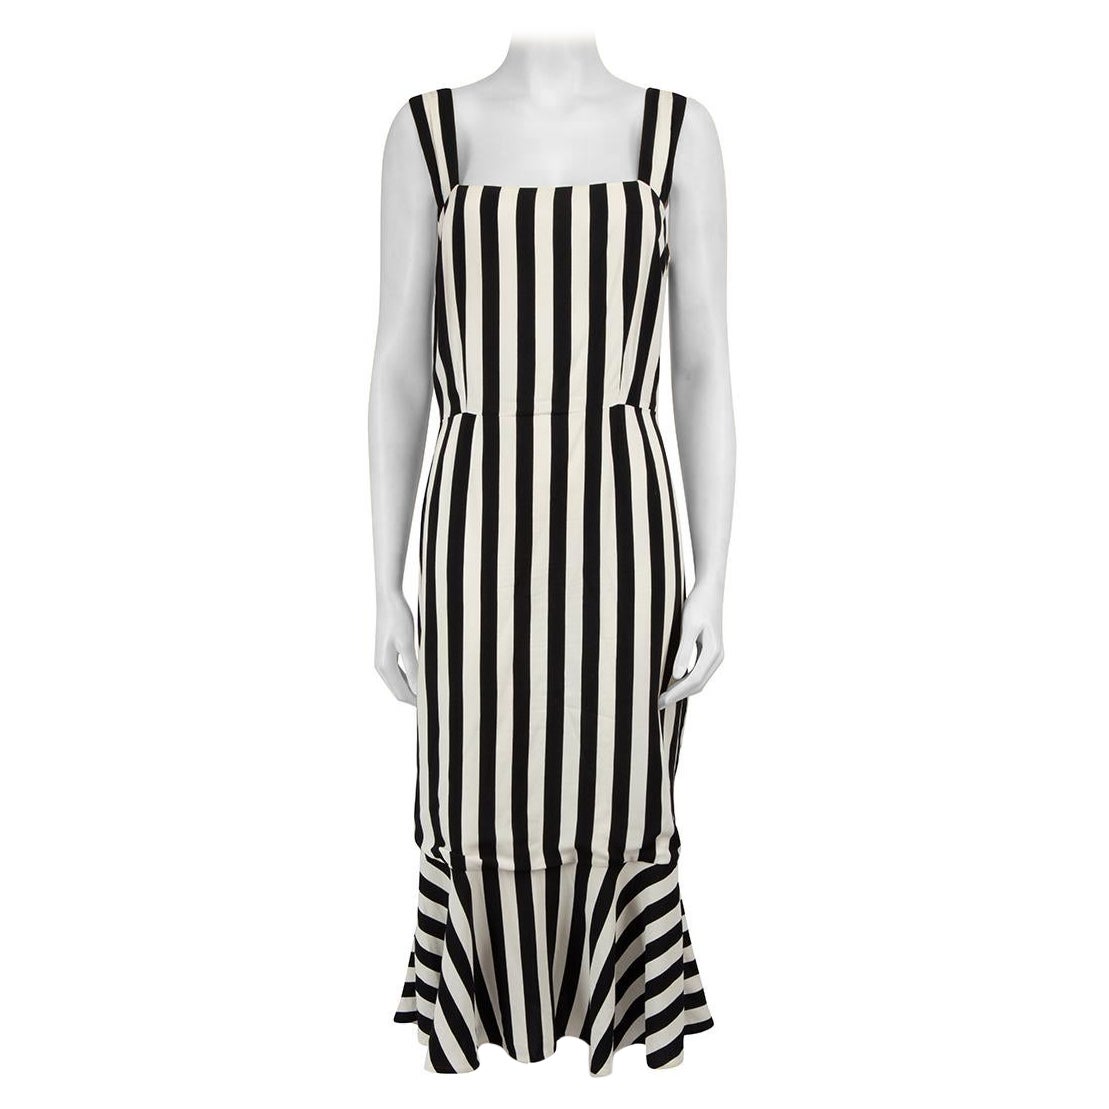 Dolce & Gabbana Black & White Striped Dress Size L For Sale